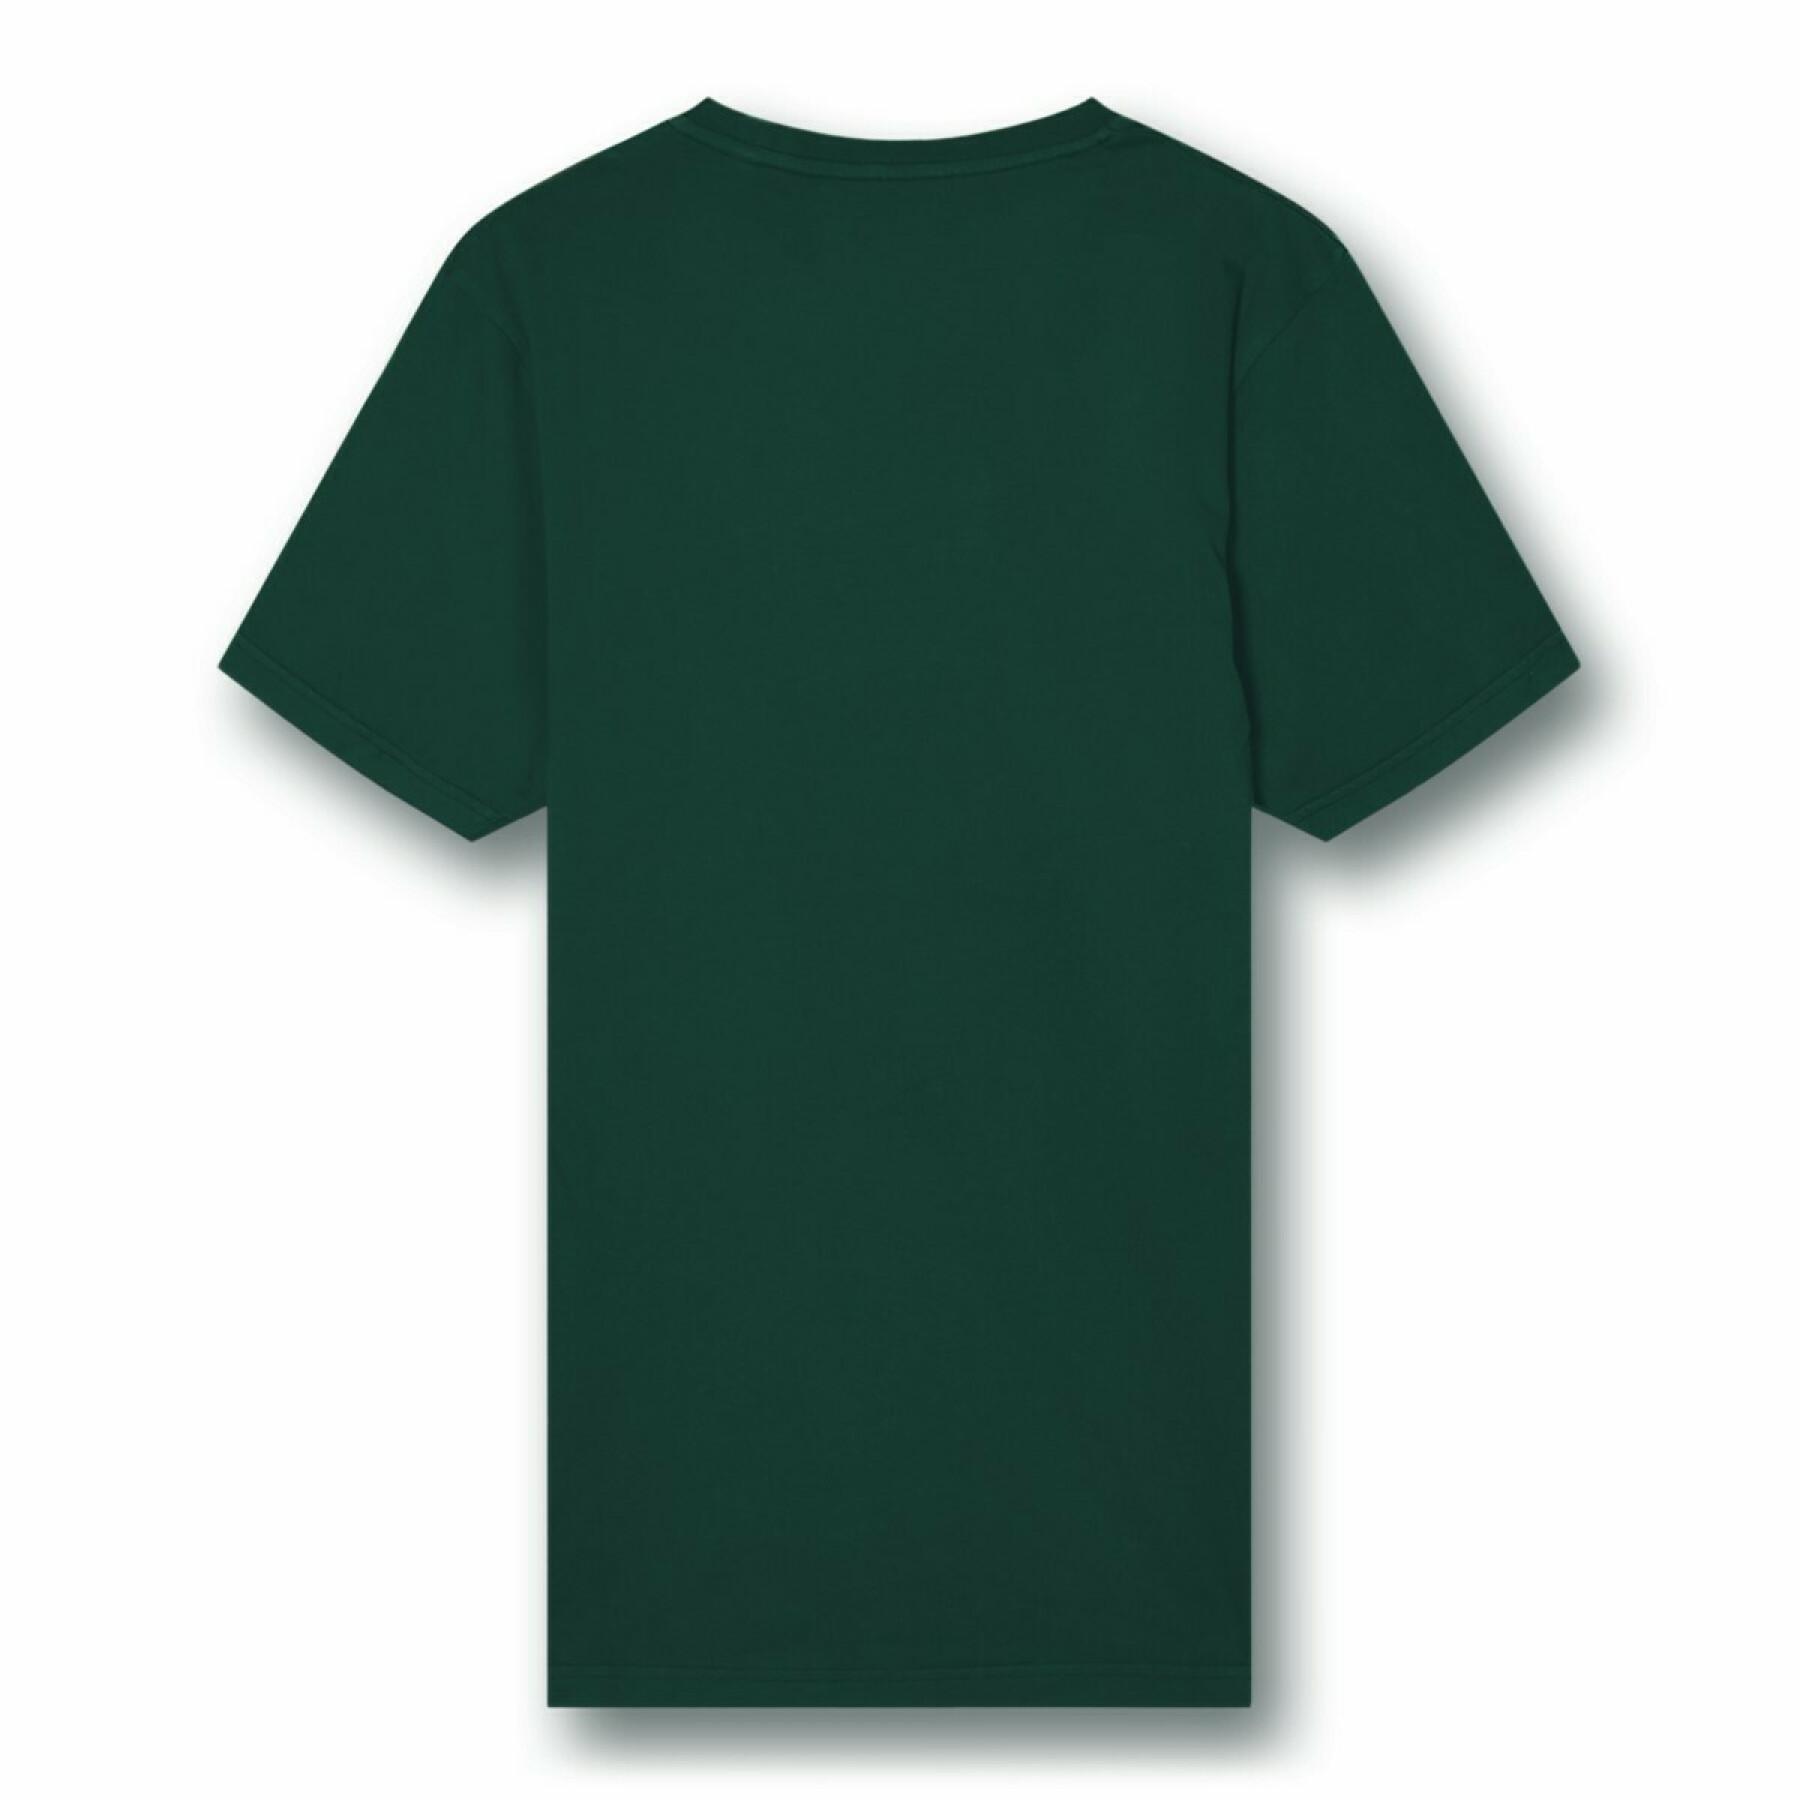 Koszulka Colorful Standard Classic Organic emerald green